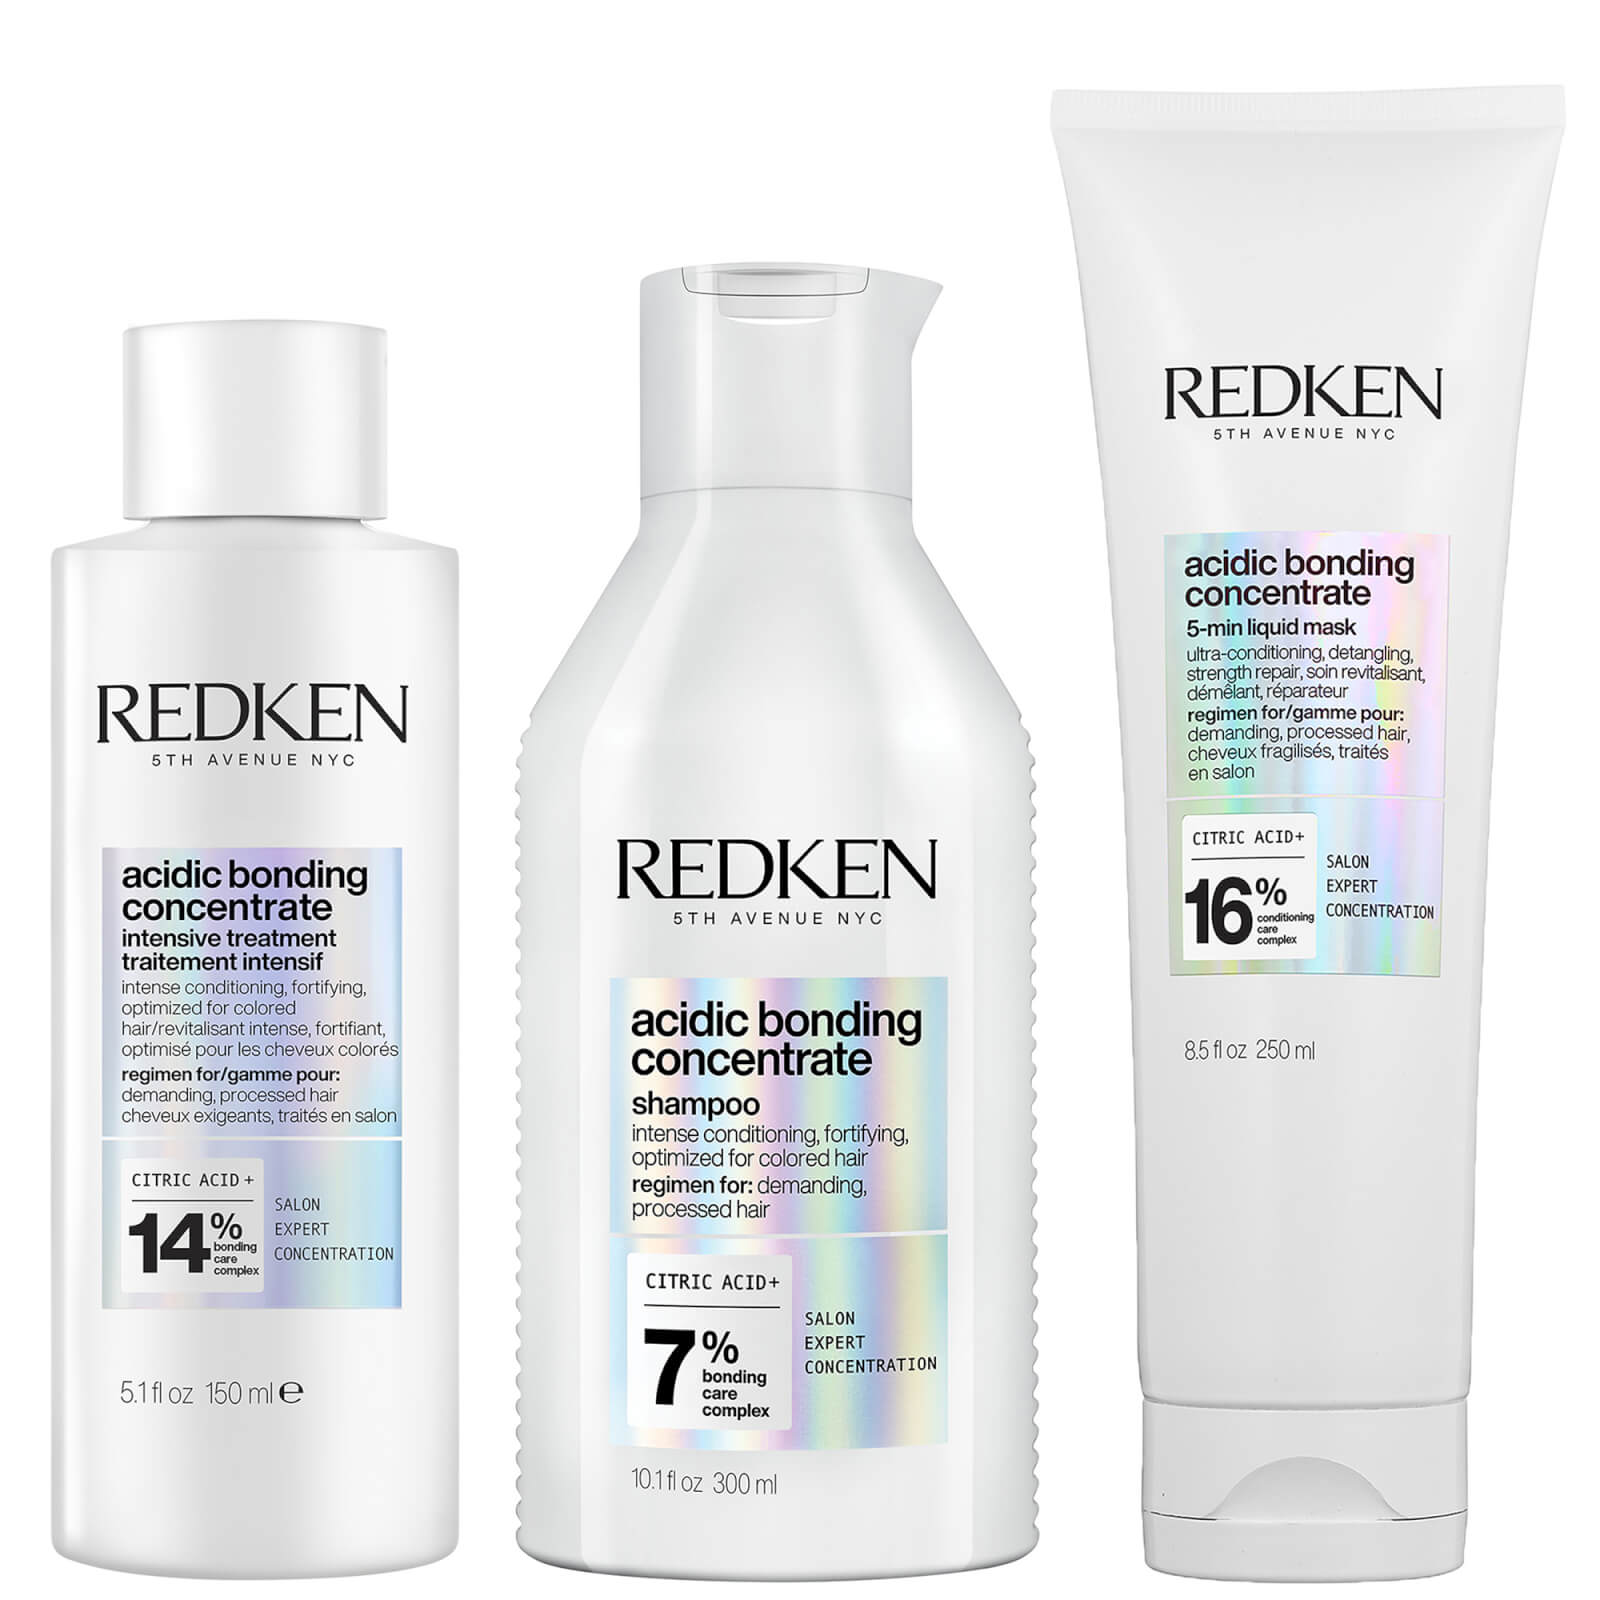 Redken Acidic Bonding Concentrate Intensive Pre-Treatment, Shampoo and 5-Minute Liquid Hair Mask Bun